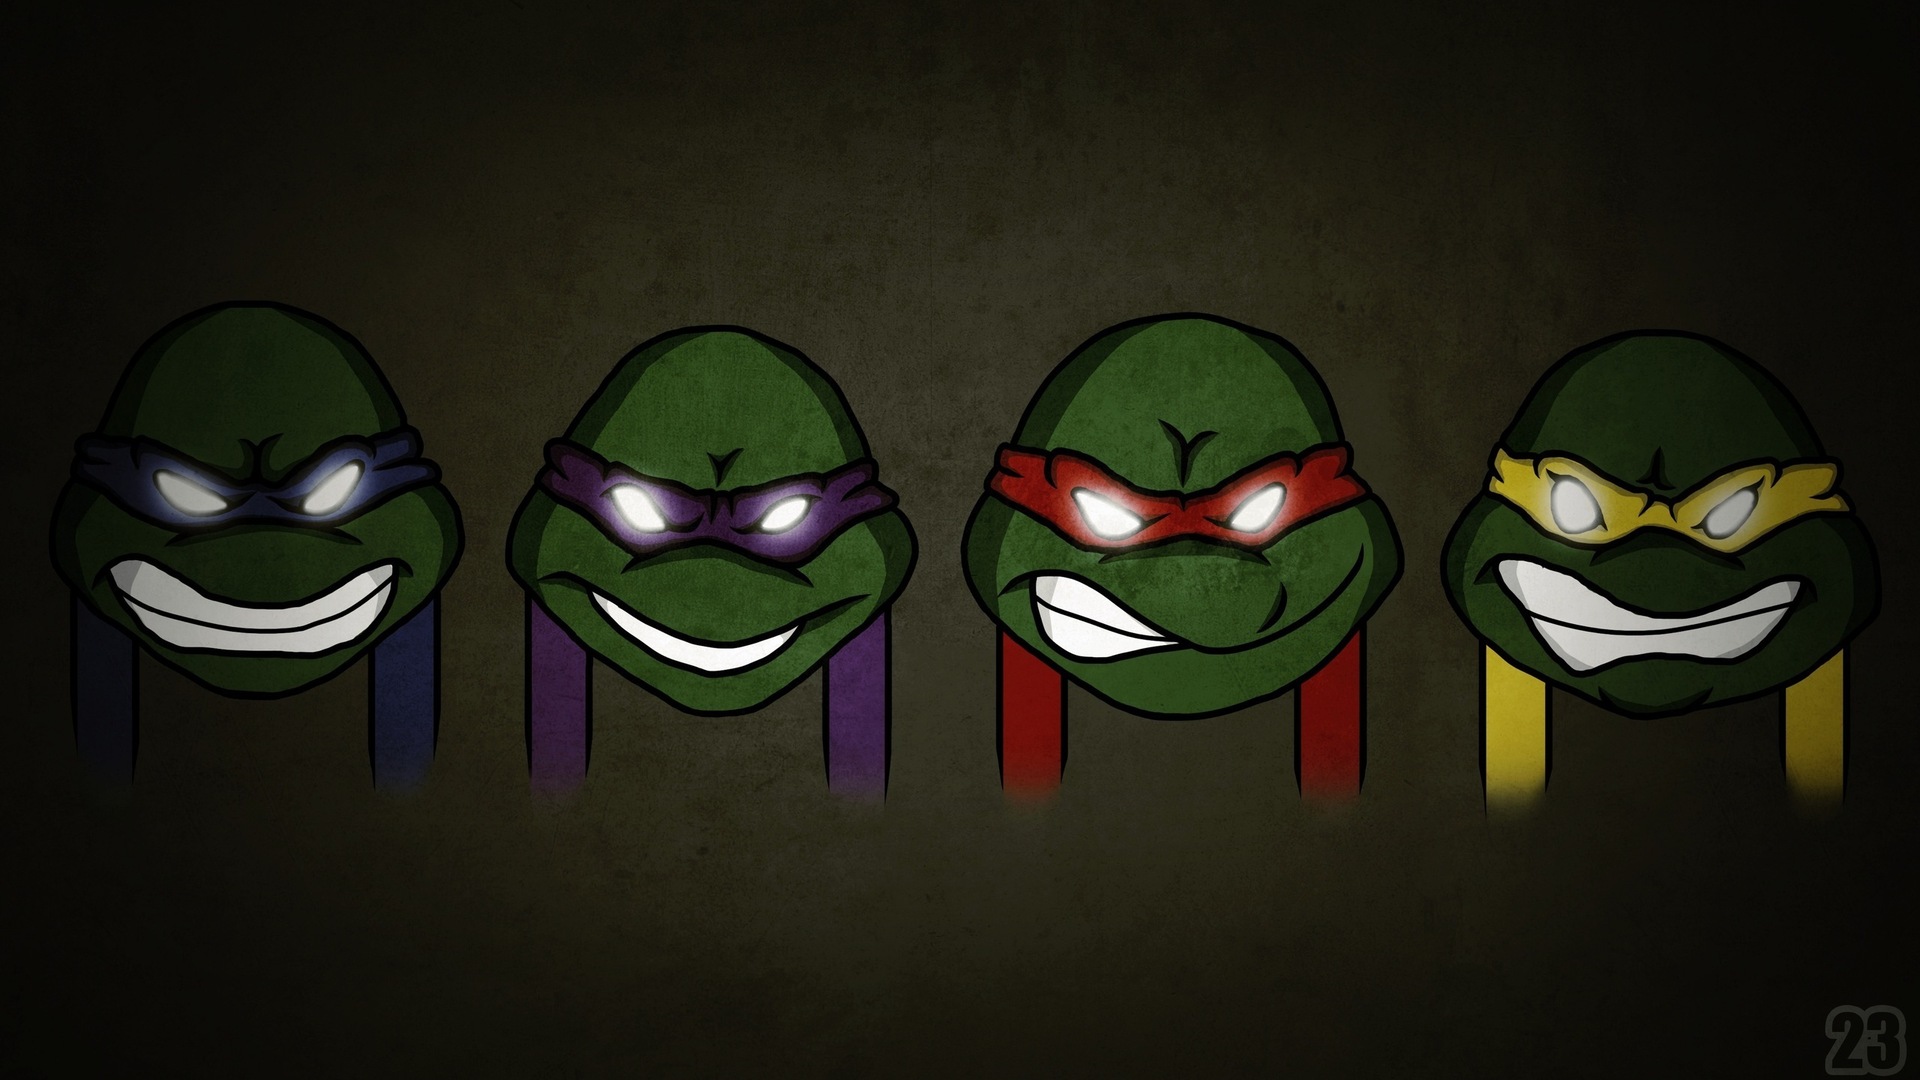 Mutan Ninja Turtles Cartoon Wallpaper Image High